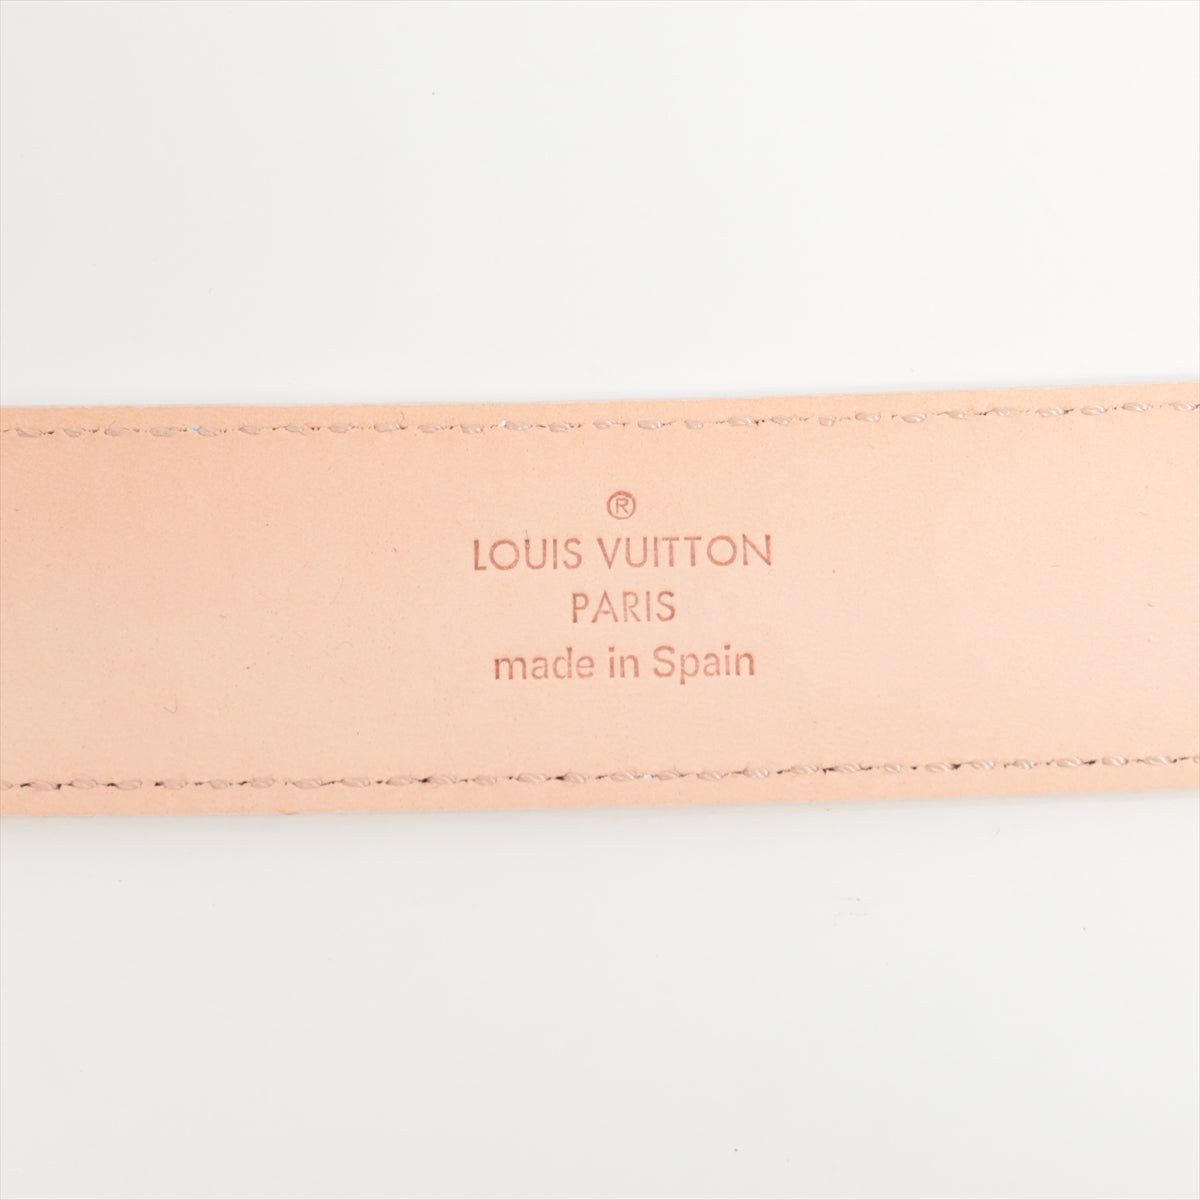 LOUIS VUITTON, a Monogramouflage leather belt, design Takashi